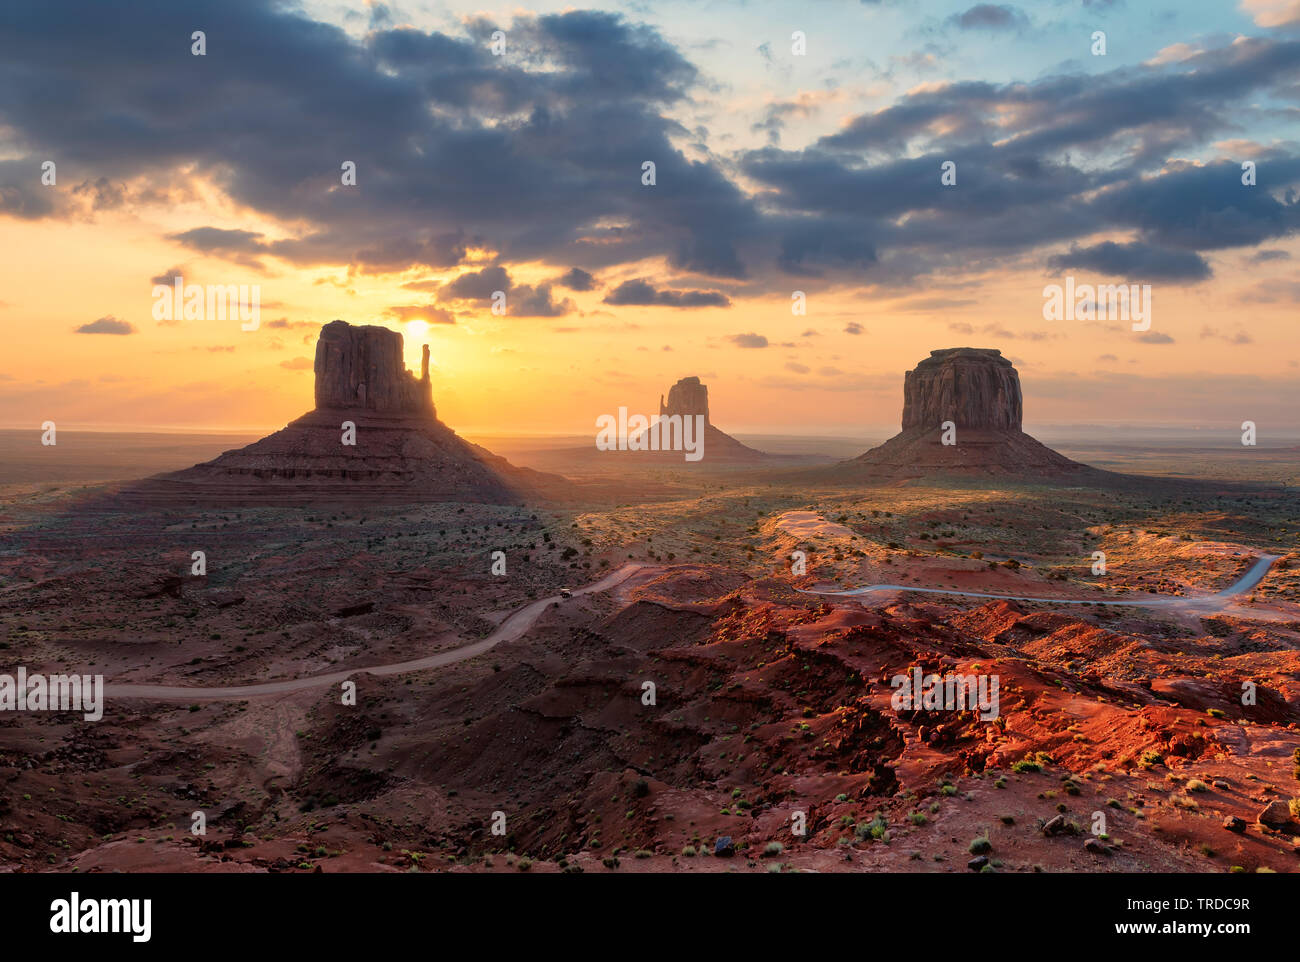 Schönen Sonnenaufgang im Monument Valley, Arizona - Utah, USA. Stockfoto